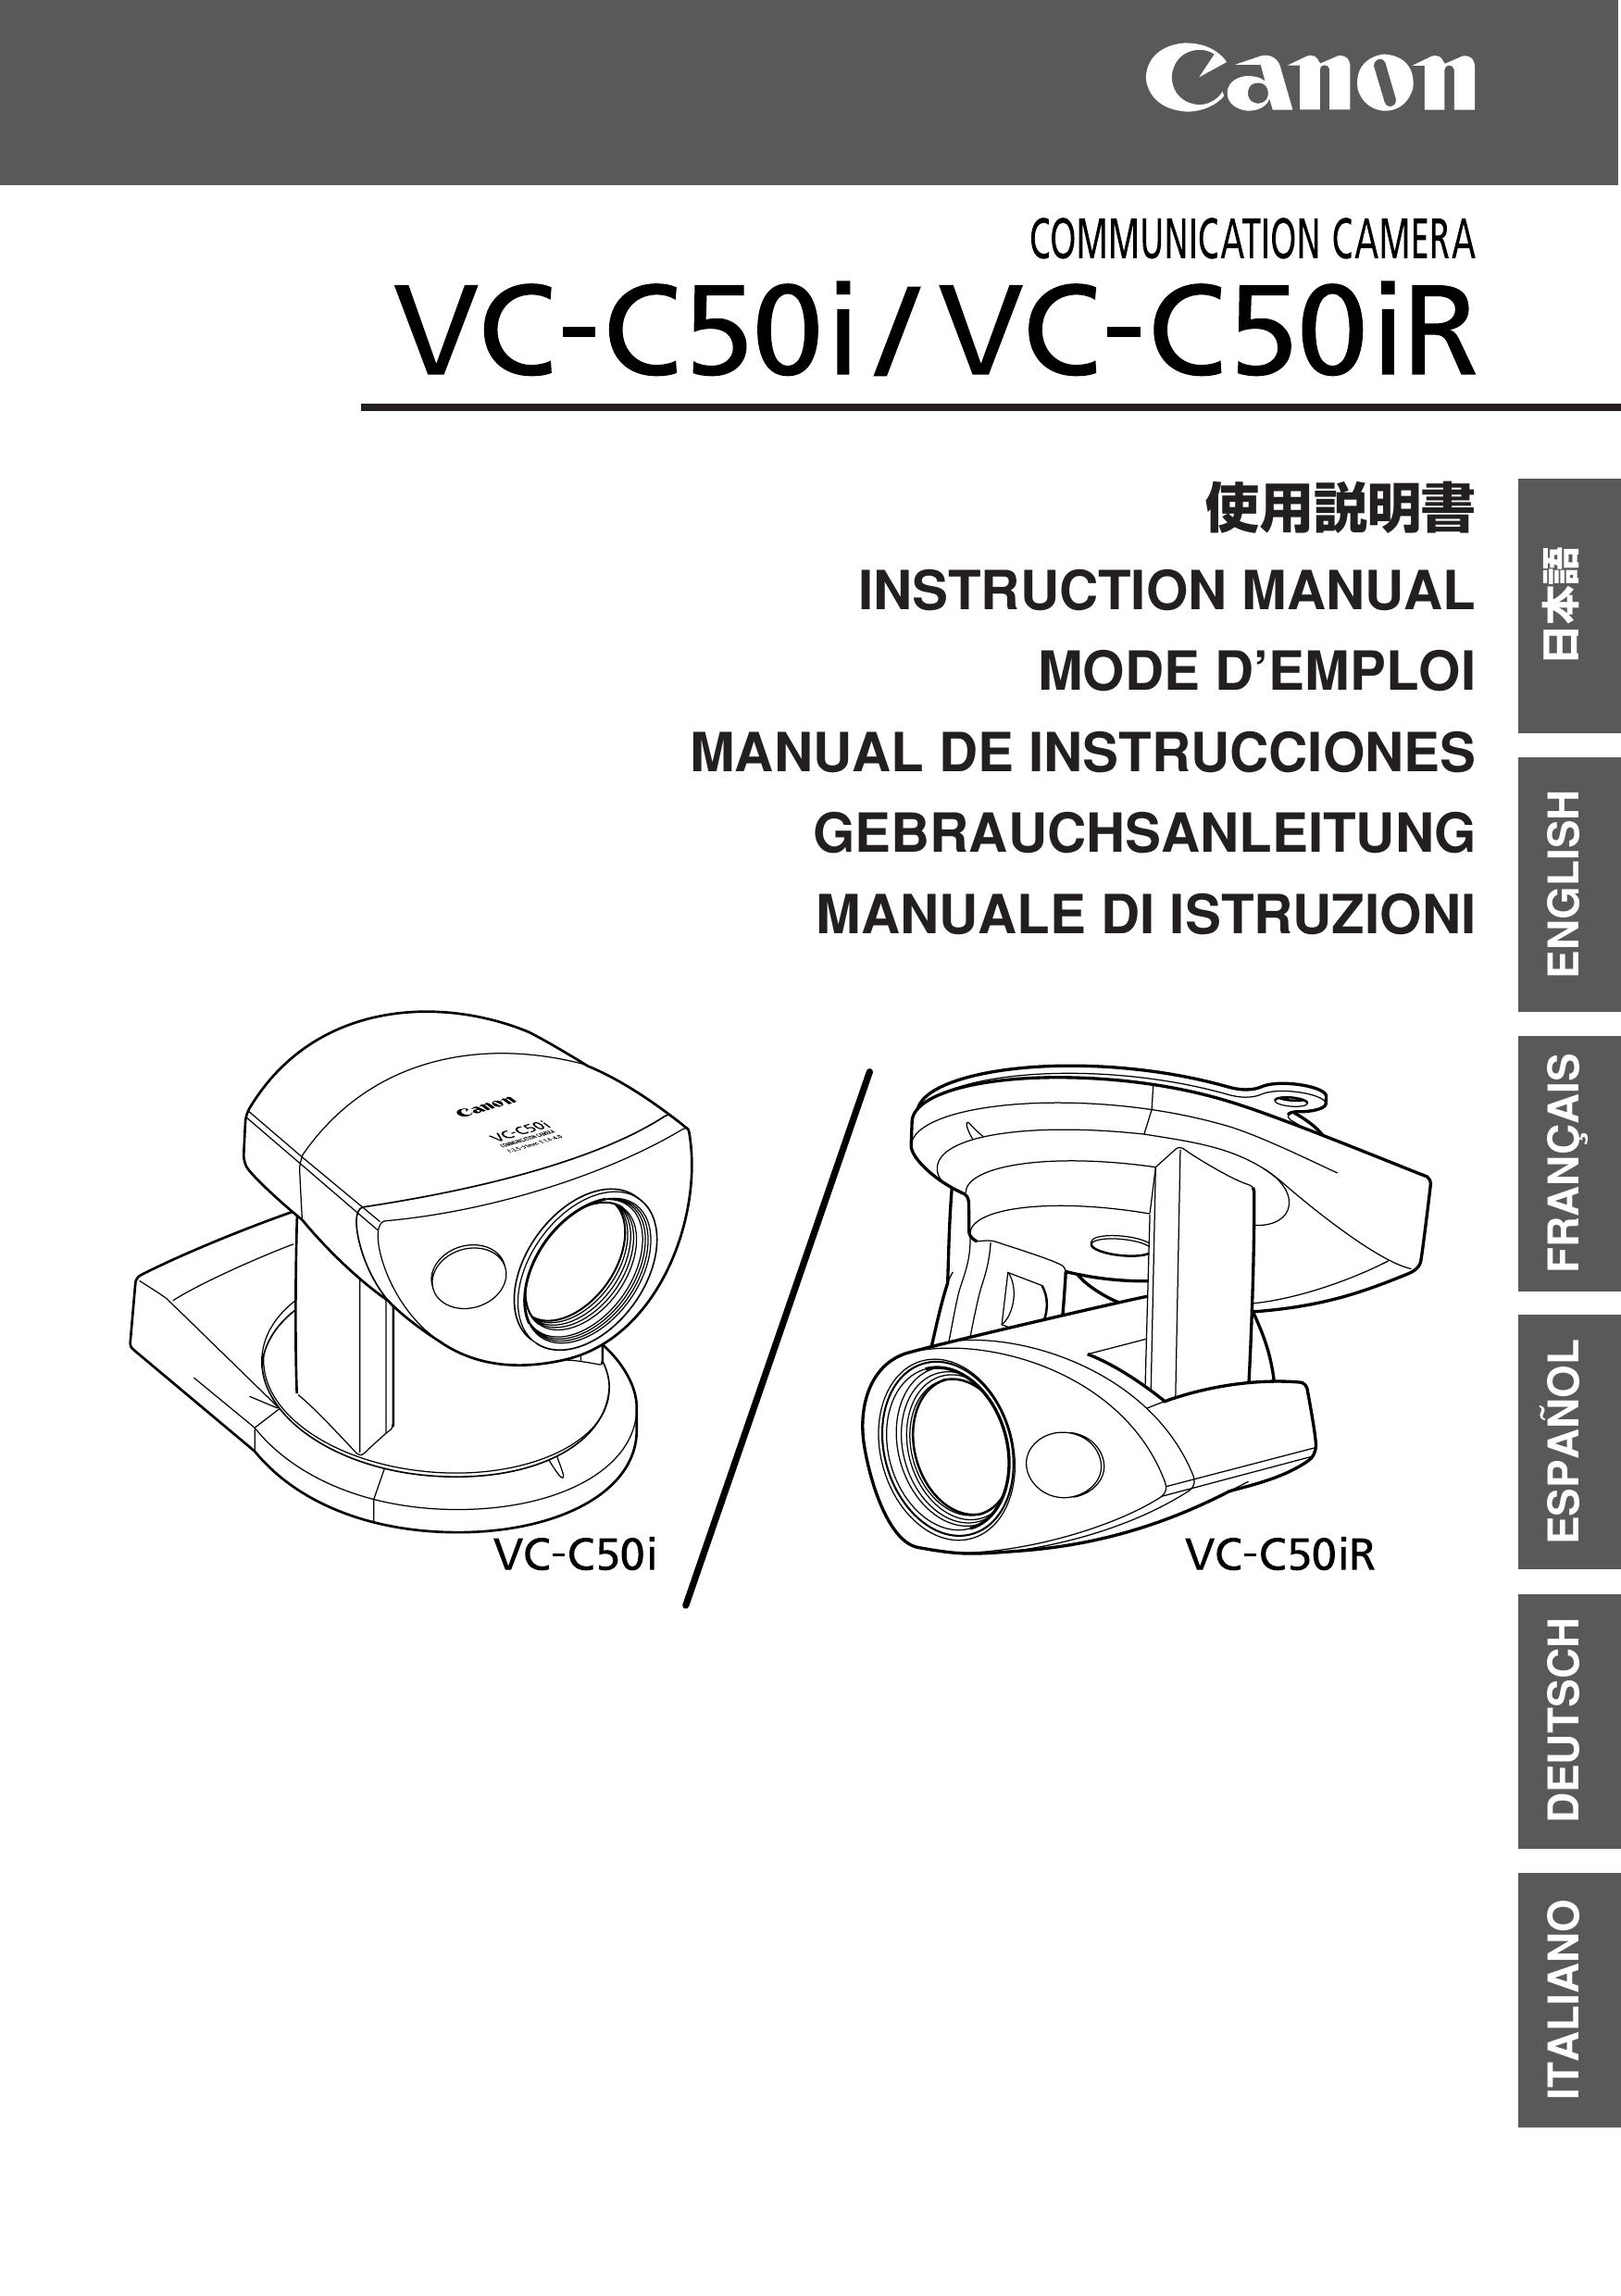 Canon VC-C50i Security Camera User Manual